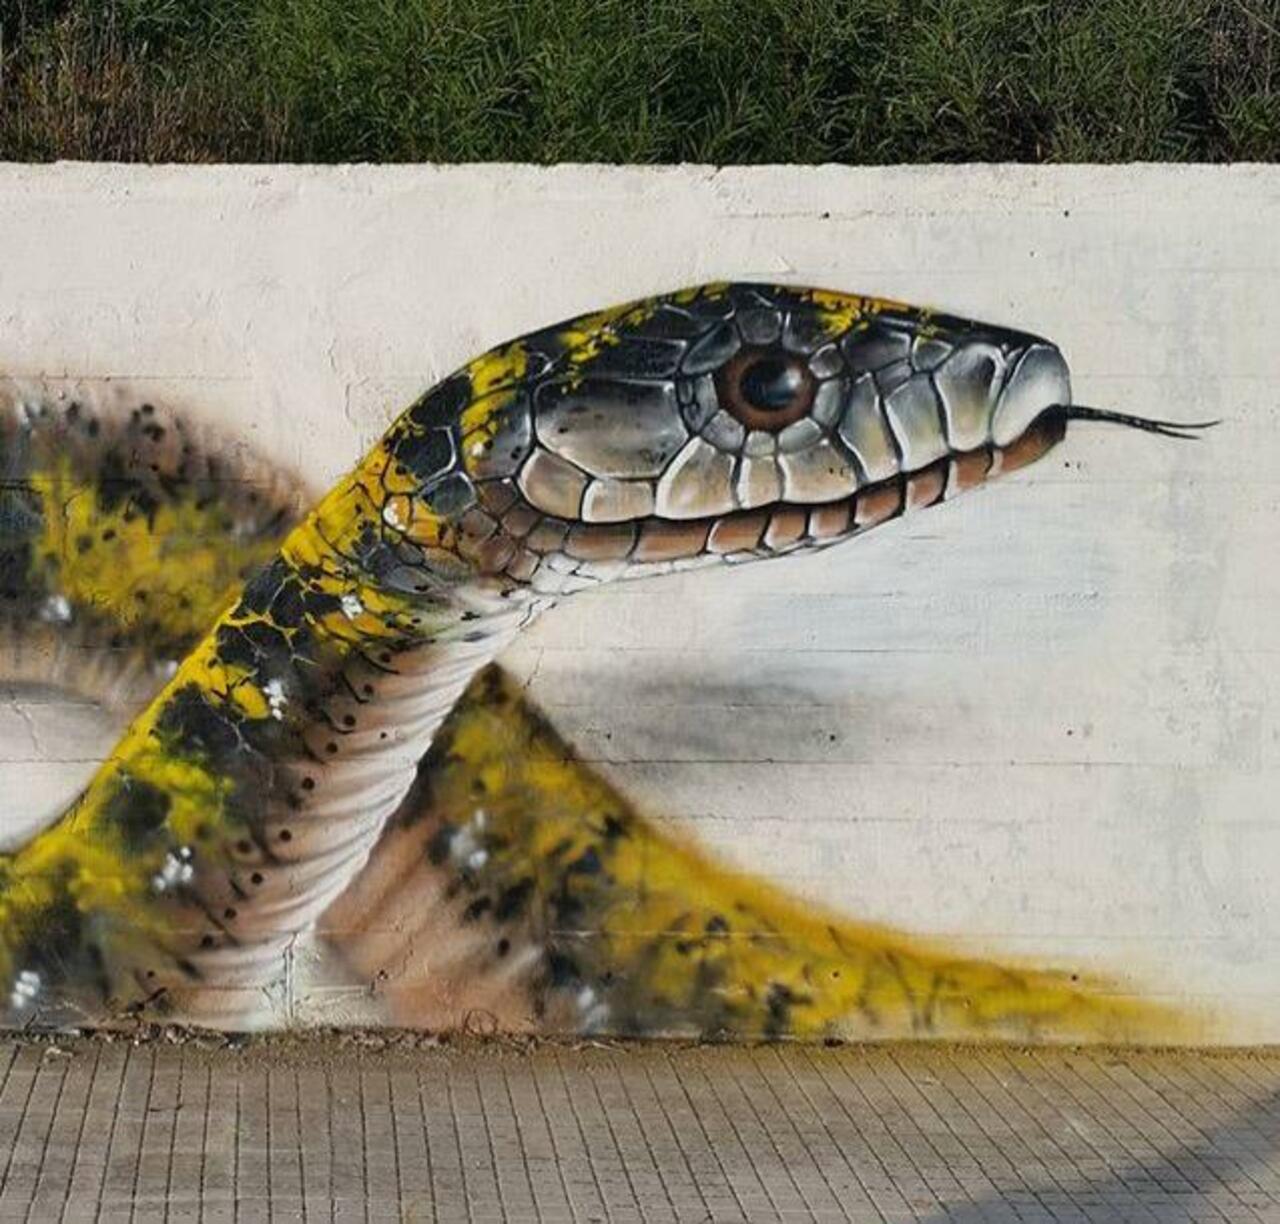 Street Art by Cosimocheone 

#art #graffiti #mural #streetart http://t.co/8Zw71hjeYK